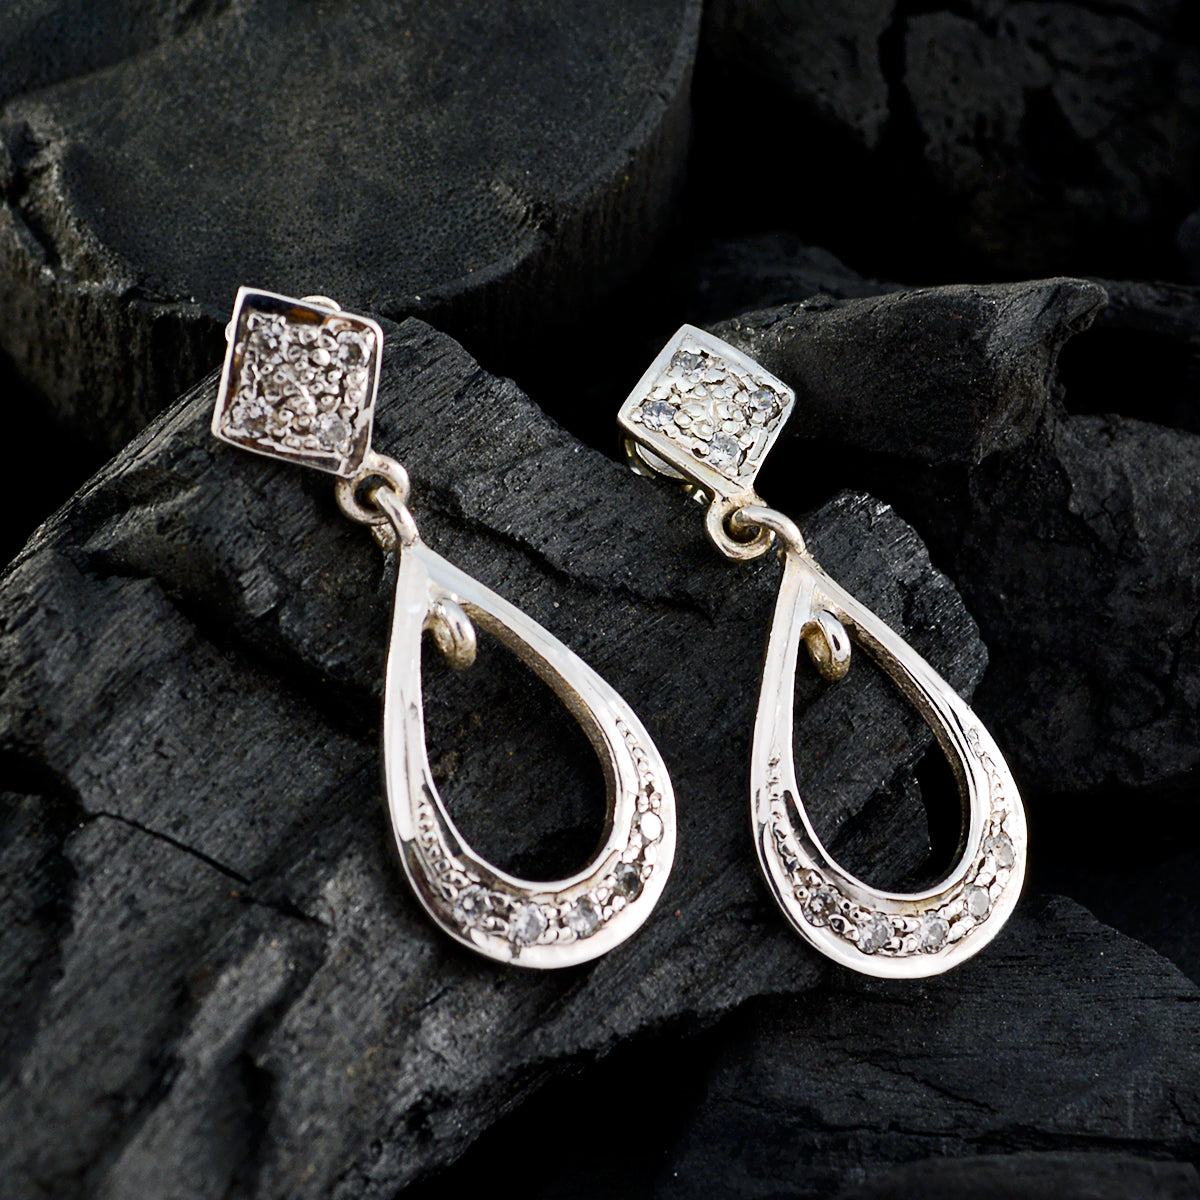 Riyo Nice Gemstone round Faceted White White CZ Silver Earring gift for handmade